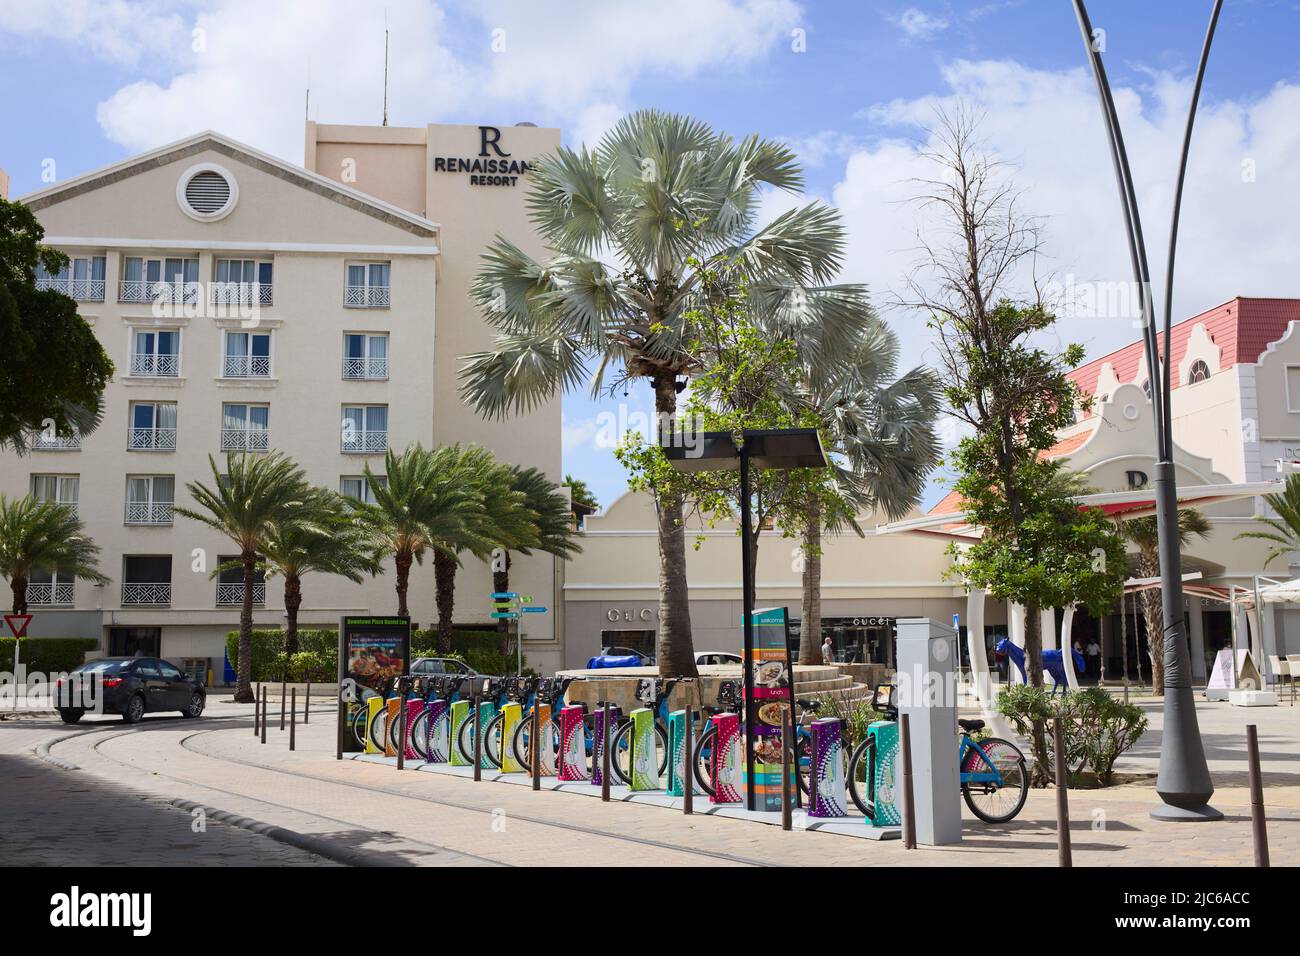 ORANJESTAD, ARUBA - DECEMBER 4, 2021: Plaza Daniel Leo square with